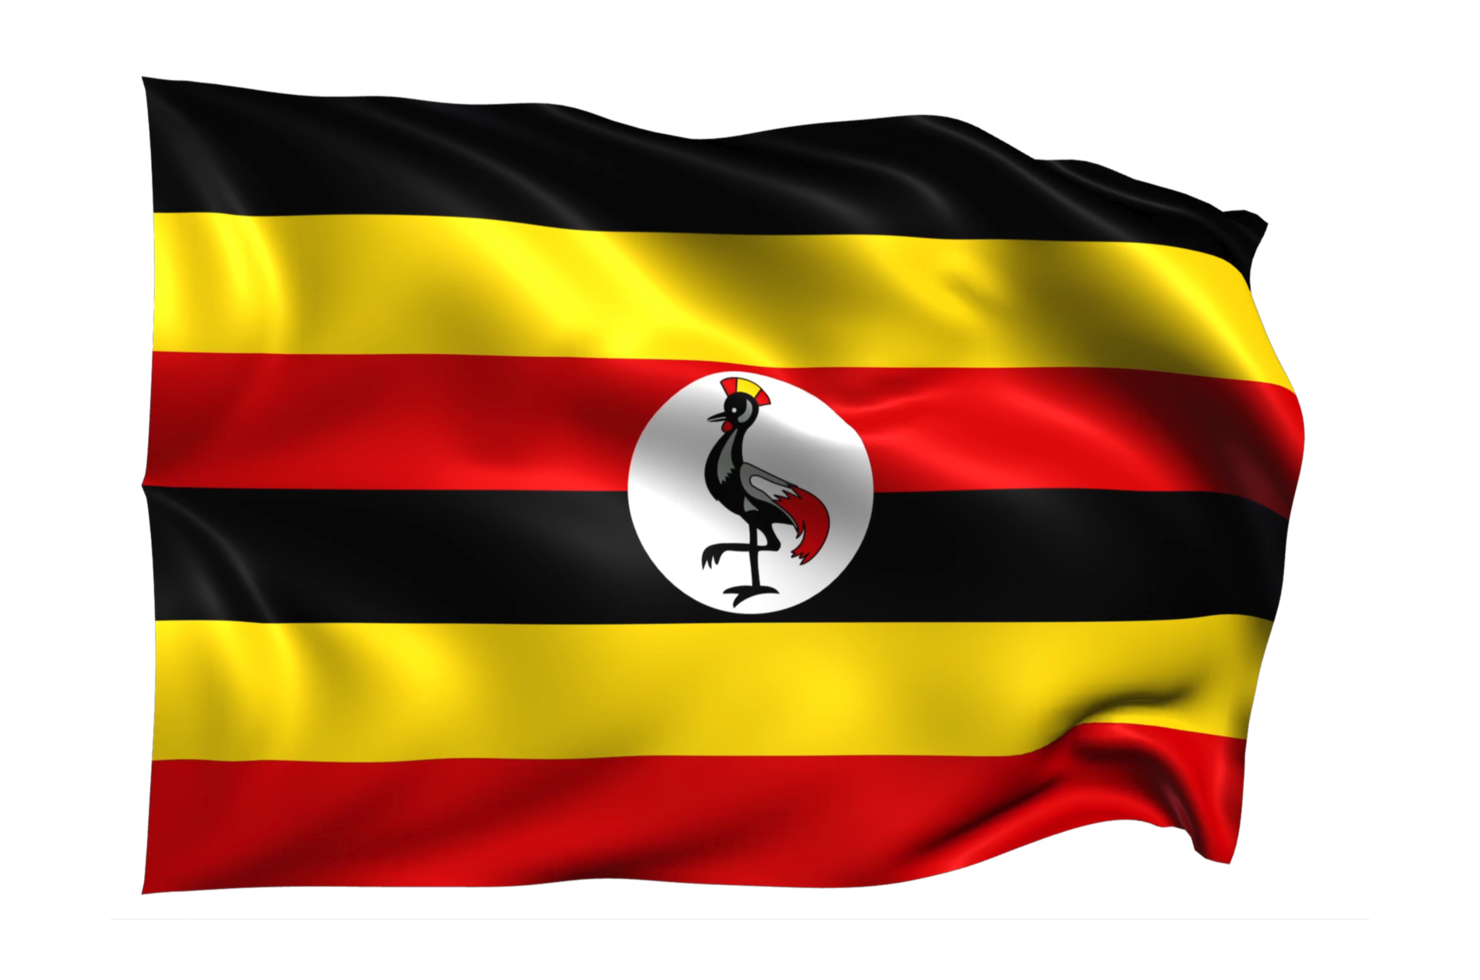 territoire ougandais agitant le drapeau png